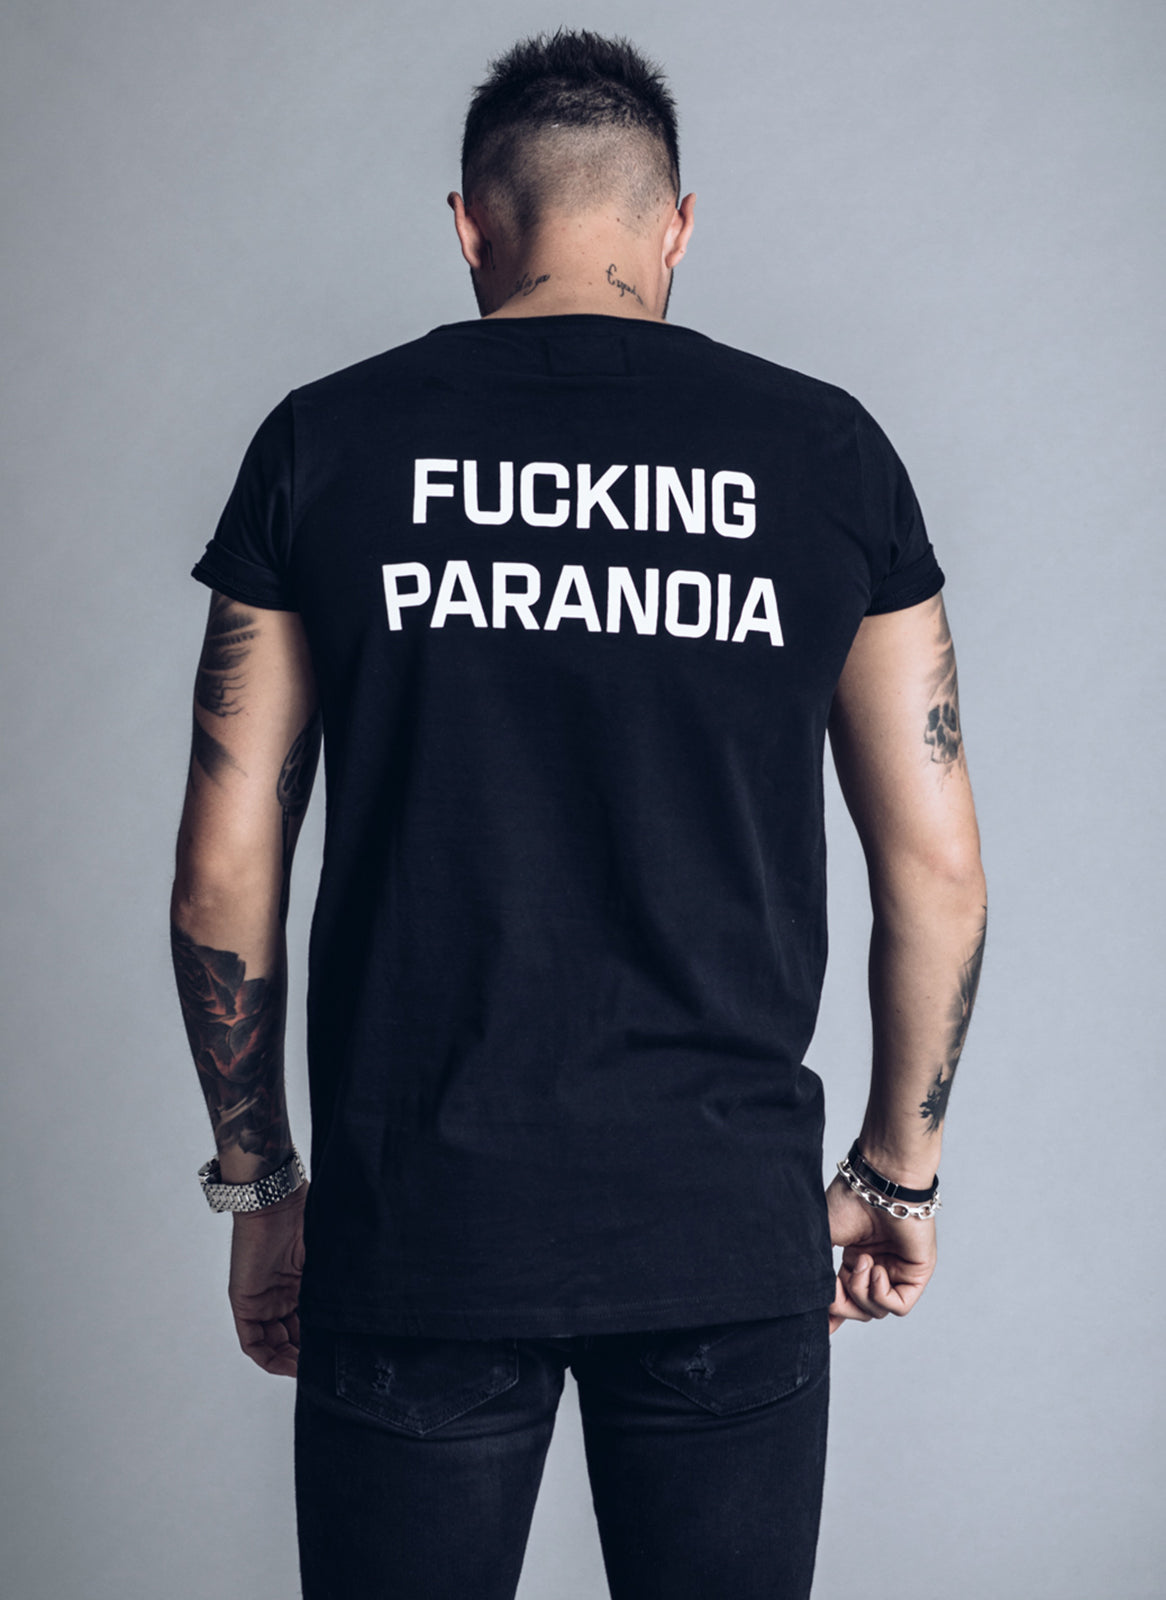 Fucking Paranoia - Black t-shirt - We love techno